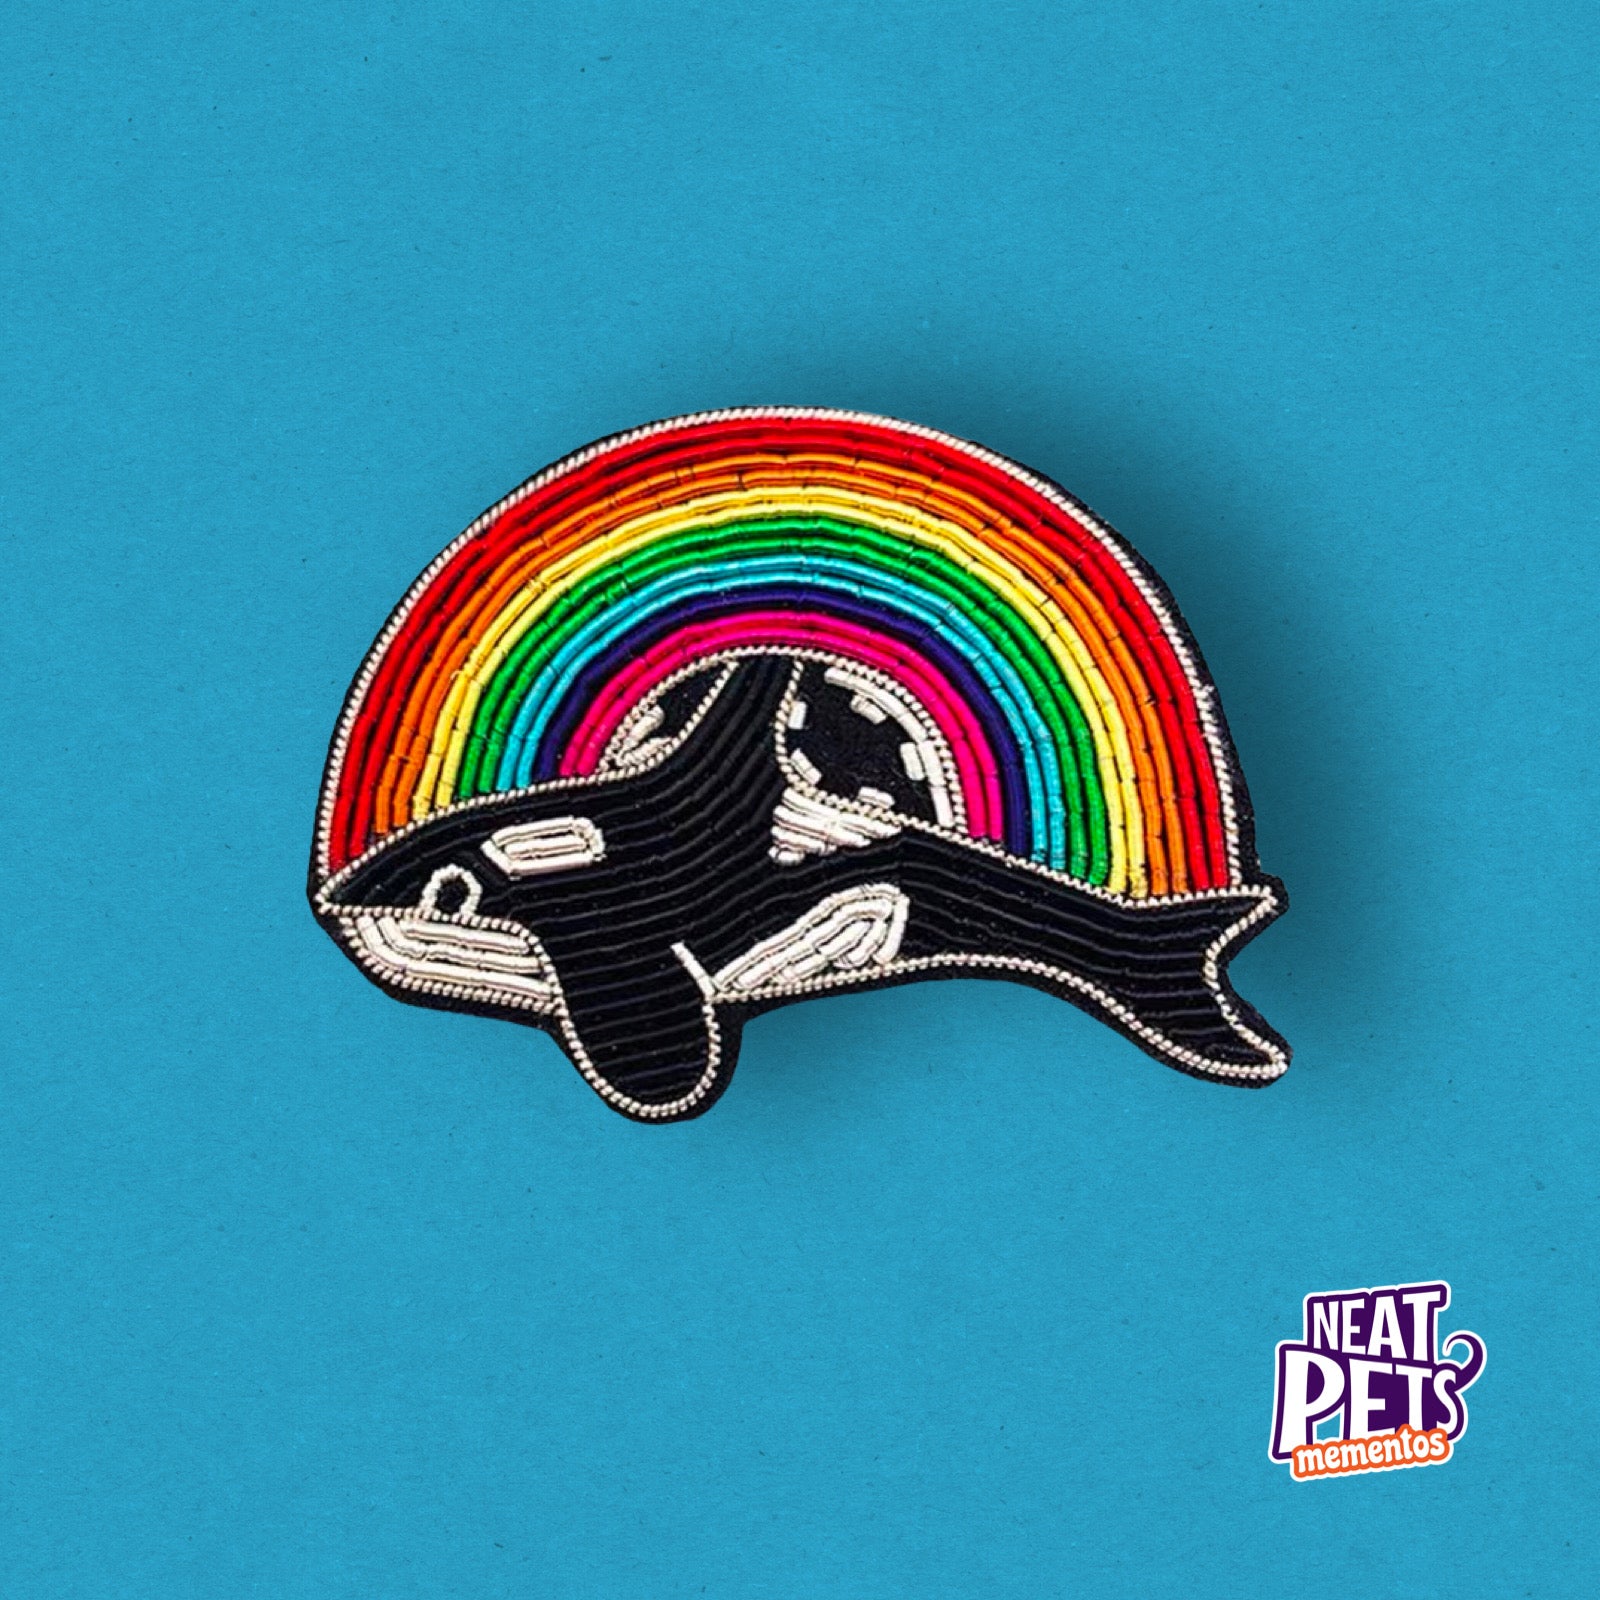 Whale Fashion Badge Pin | Neat Pets Mementos